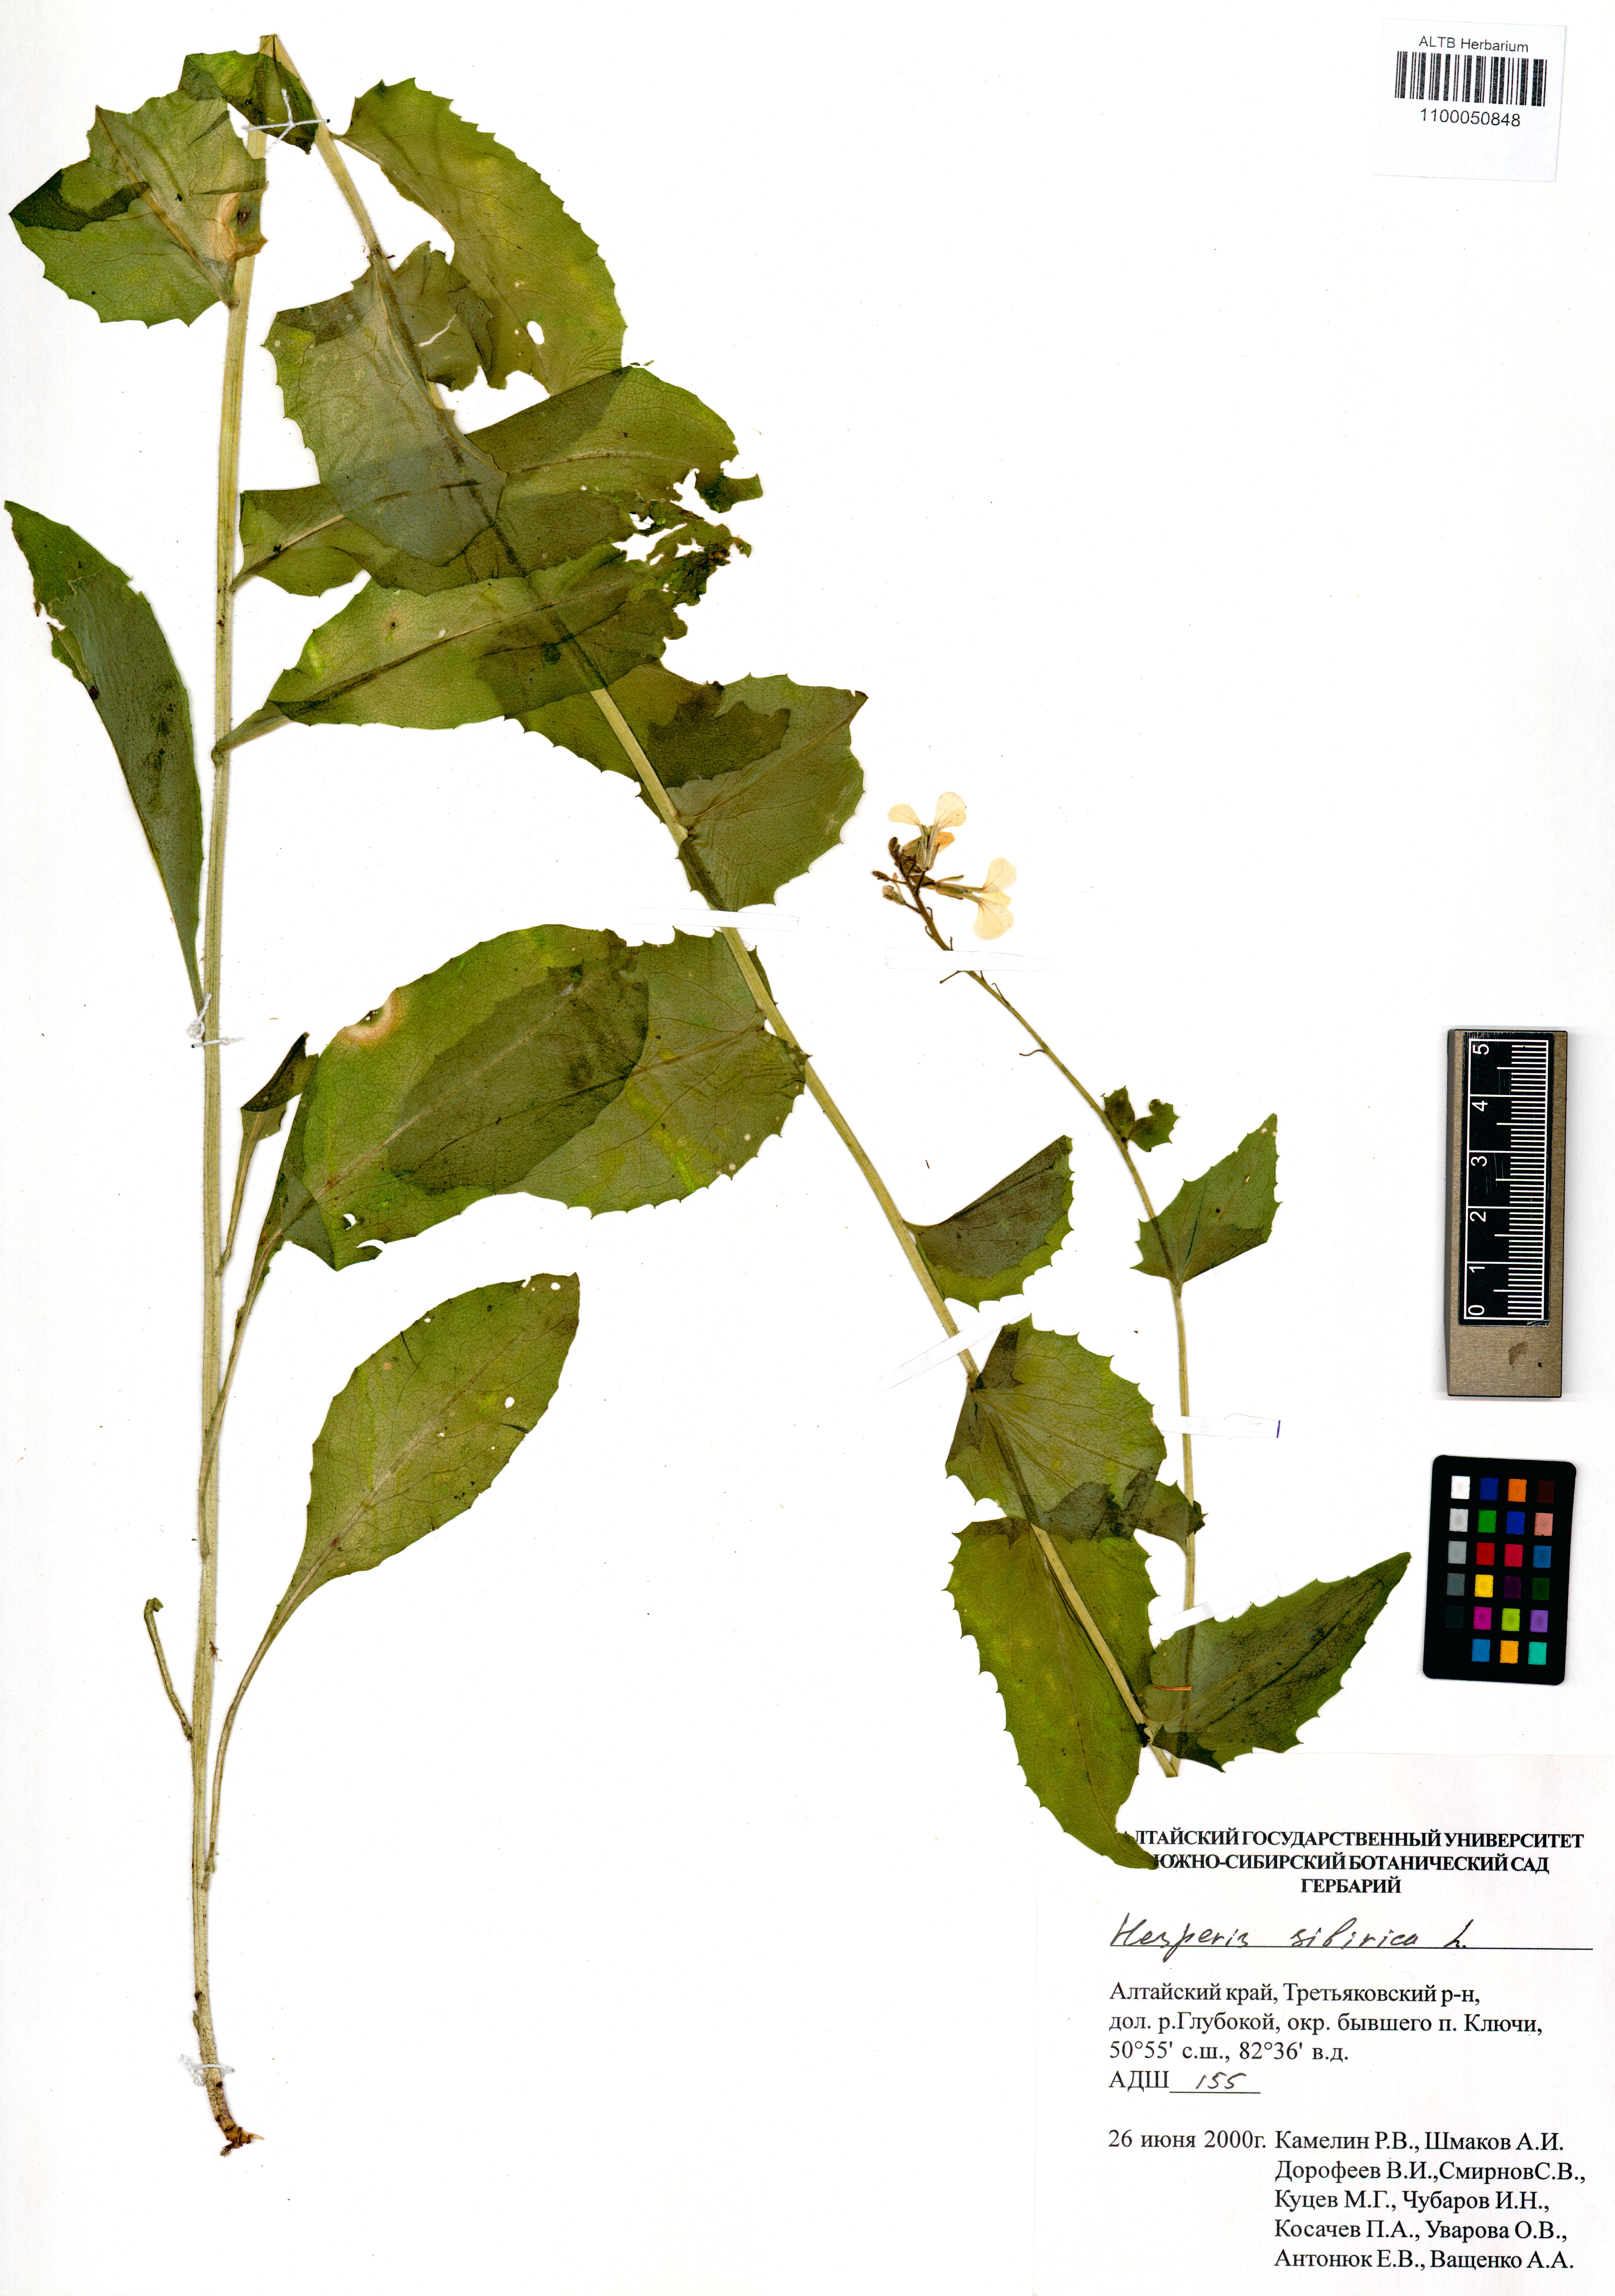 Hesperis sibirica L.